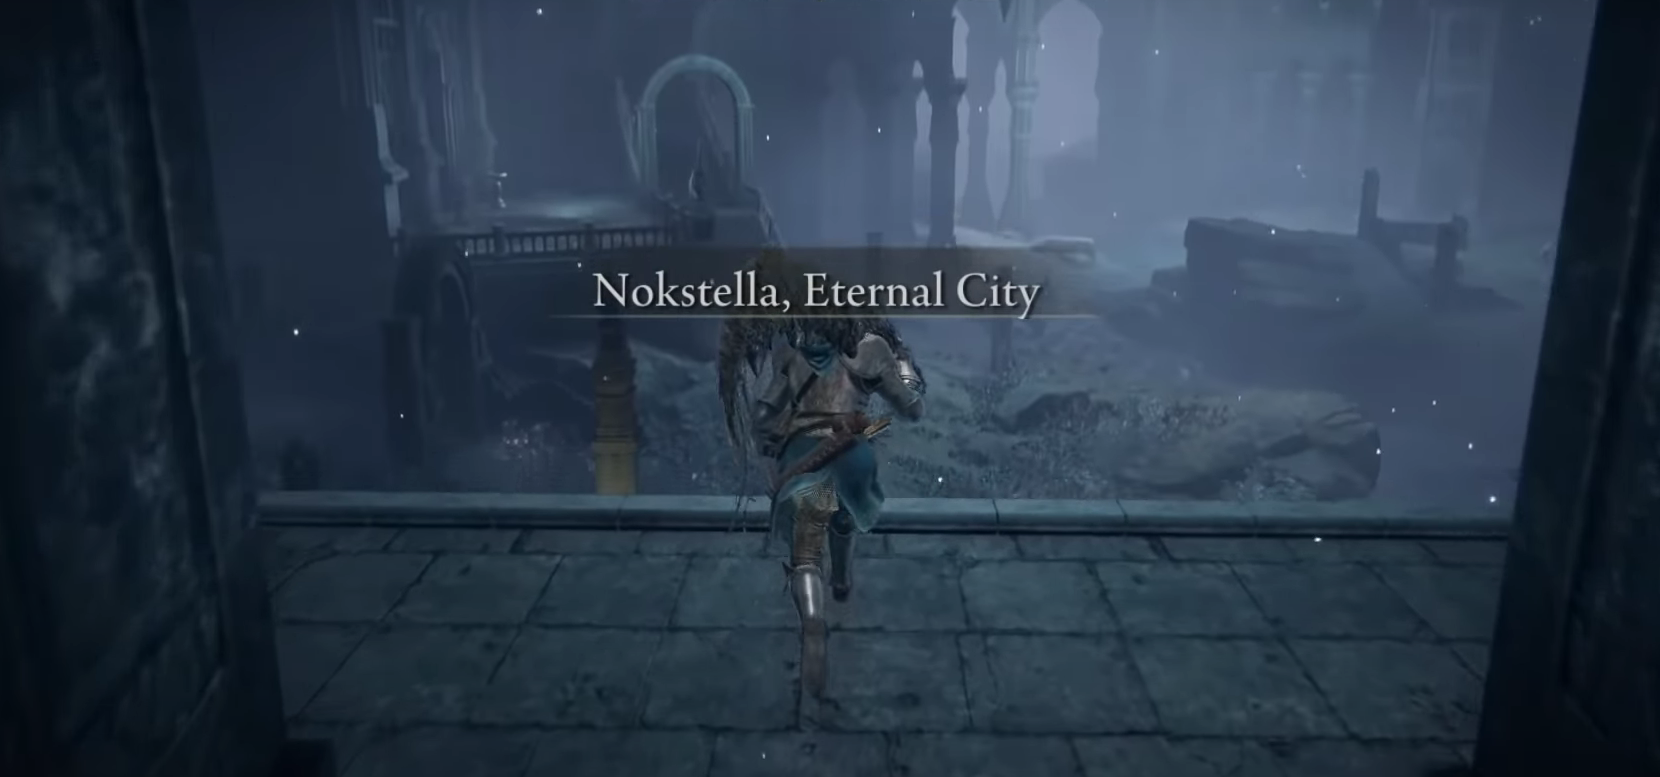 Entering Nokstella, Eternal City